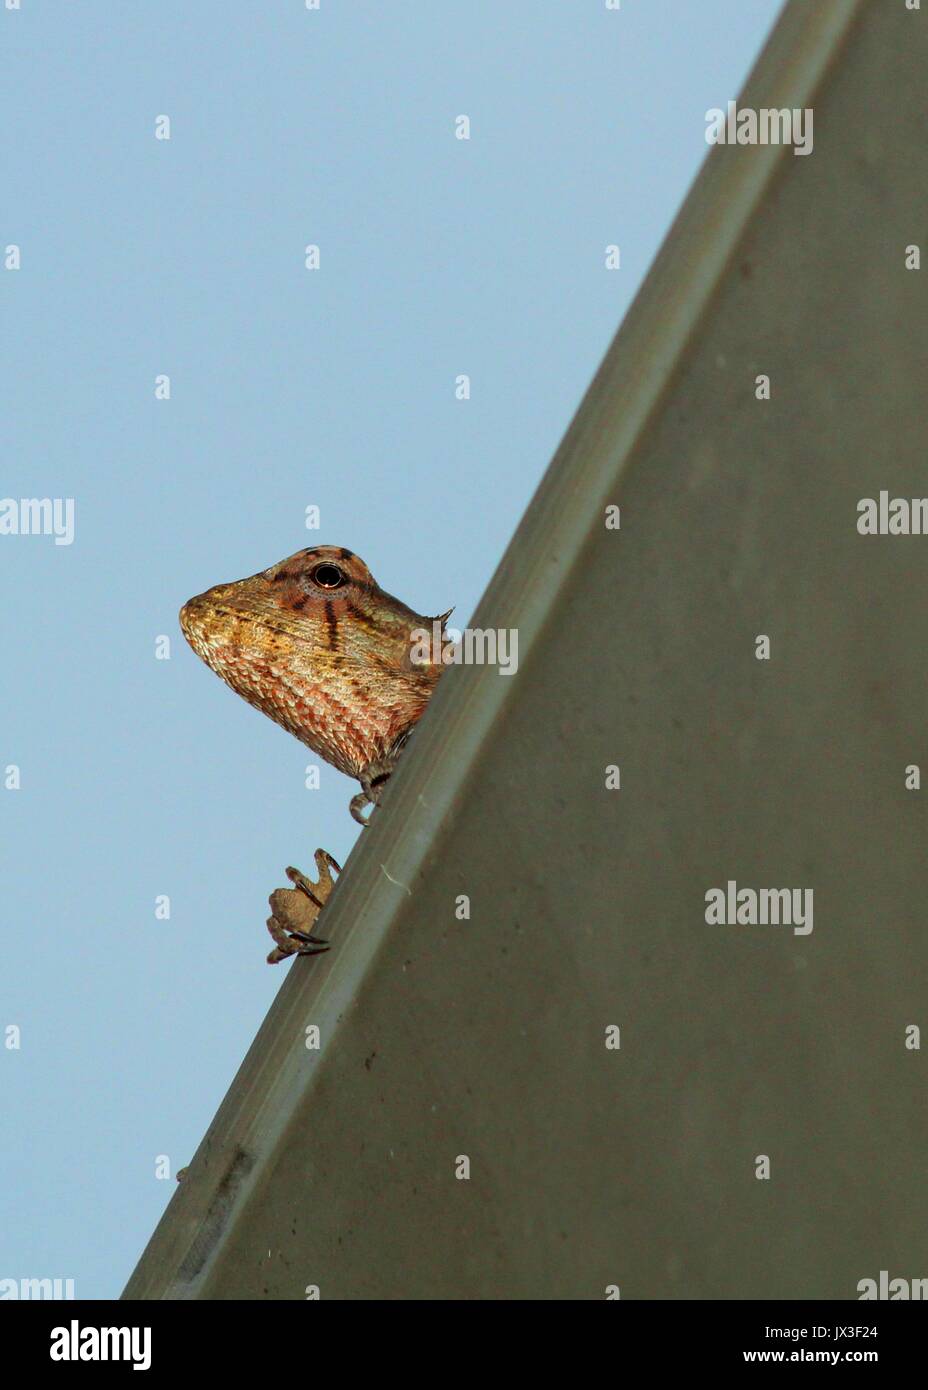 close up of a small garden lizard / tree lizard seen on a roof gutter enjoying the view & relaxing in  Sri Lanka Stock Photo